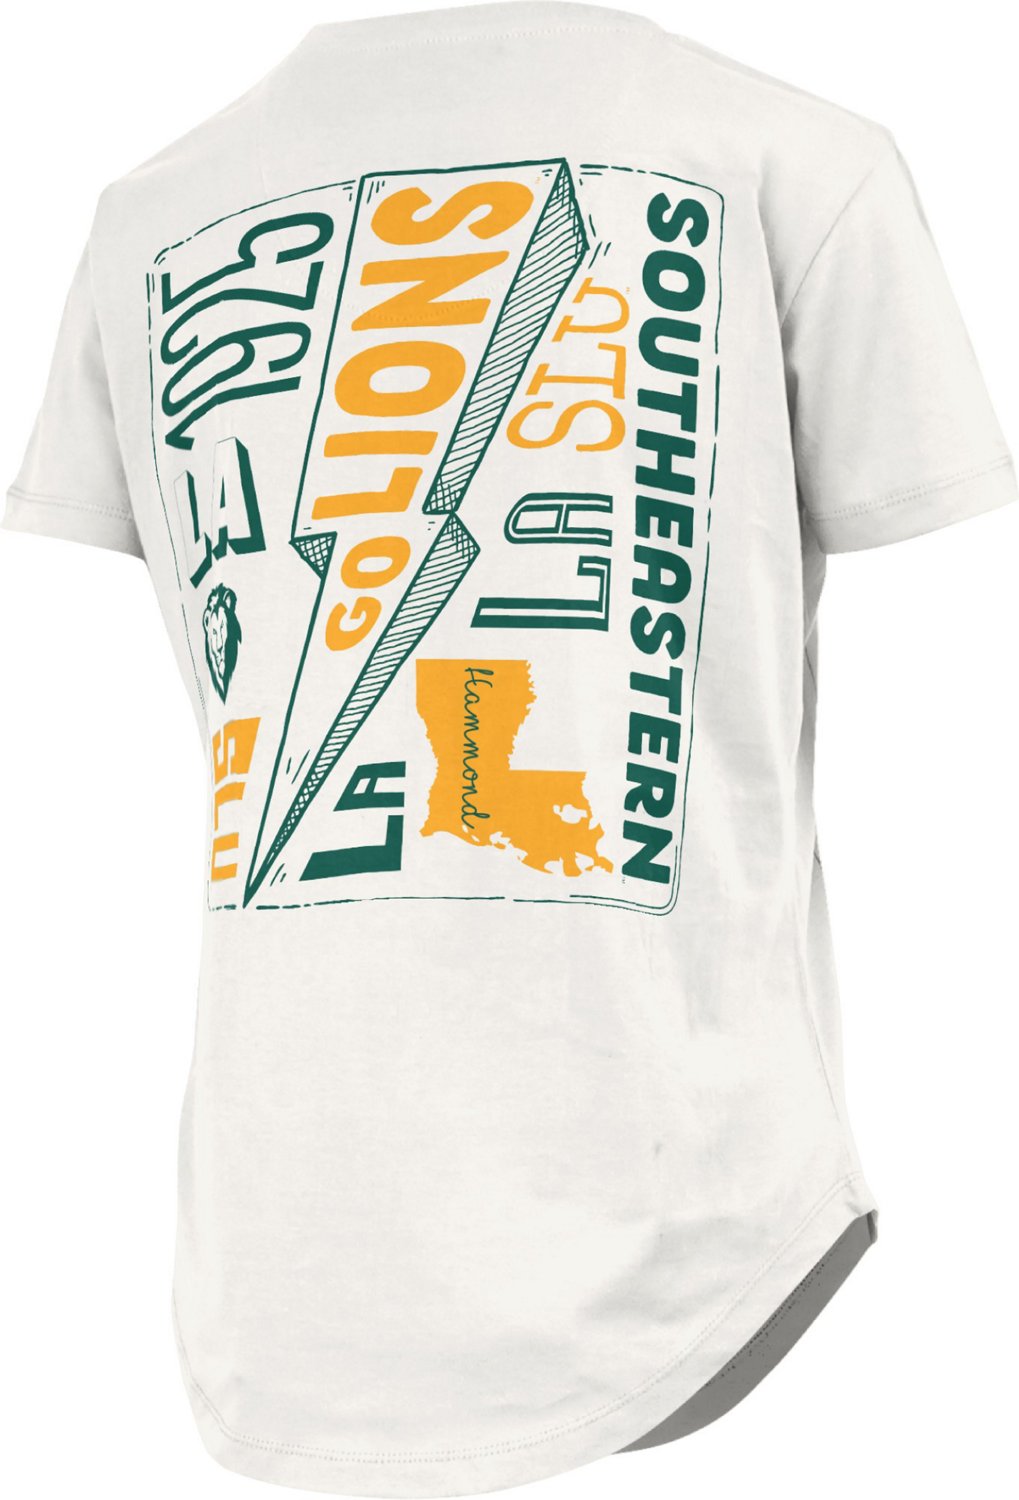 Southeastern Louisiana University Short Sleeve T-Shirt: Southeastern  Louisiana University